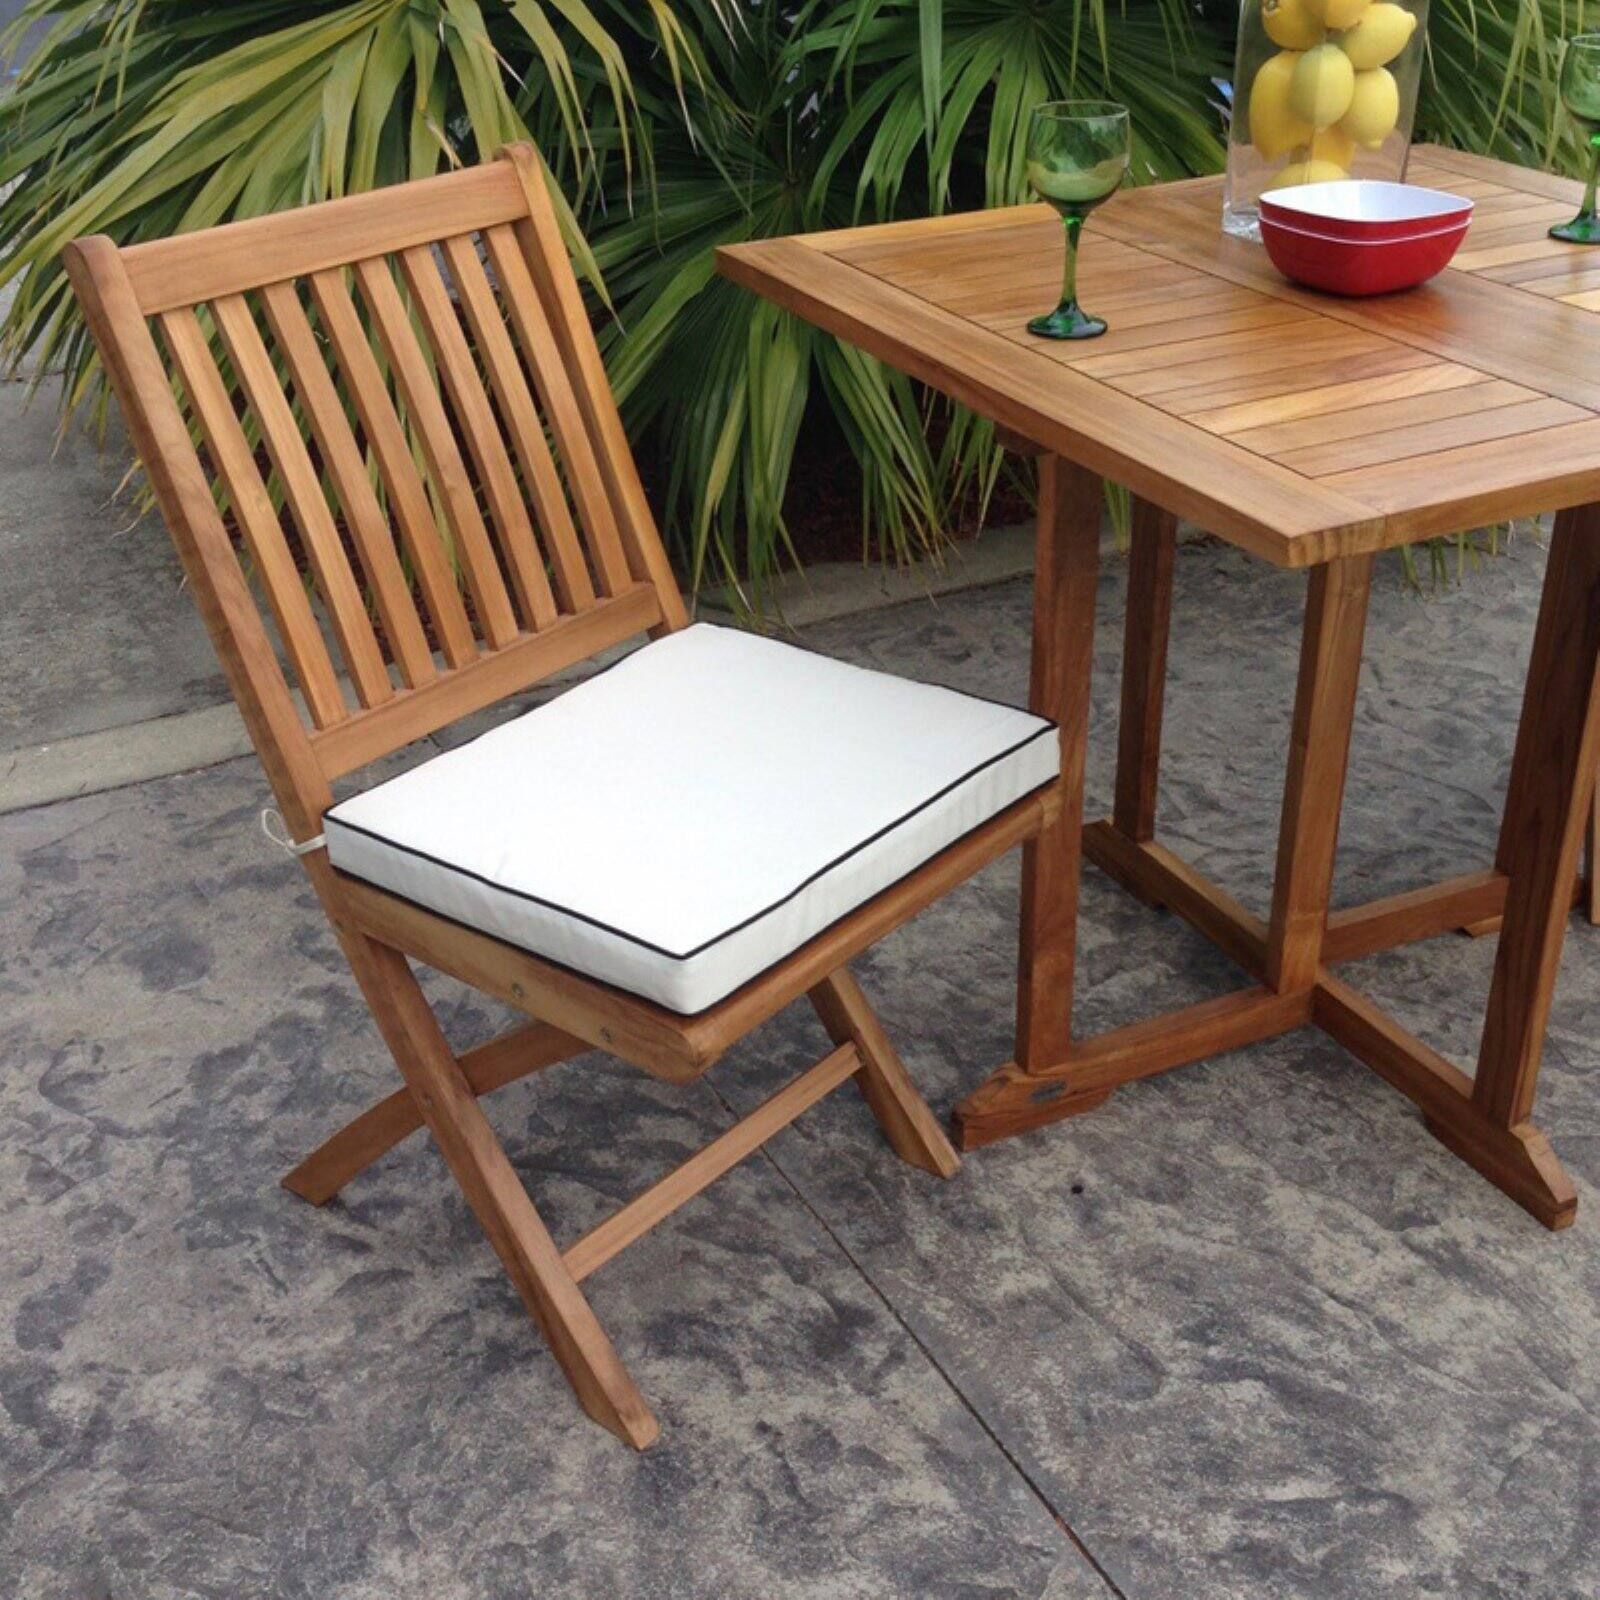 Chic Teak Santa Barbara Outdoor Folding Chair Cushion – Walmart In Teak Outdoor Folding Armchairs (View 3 of 15)